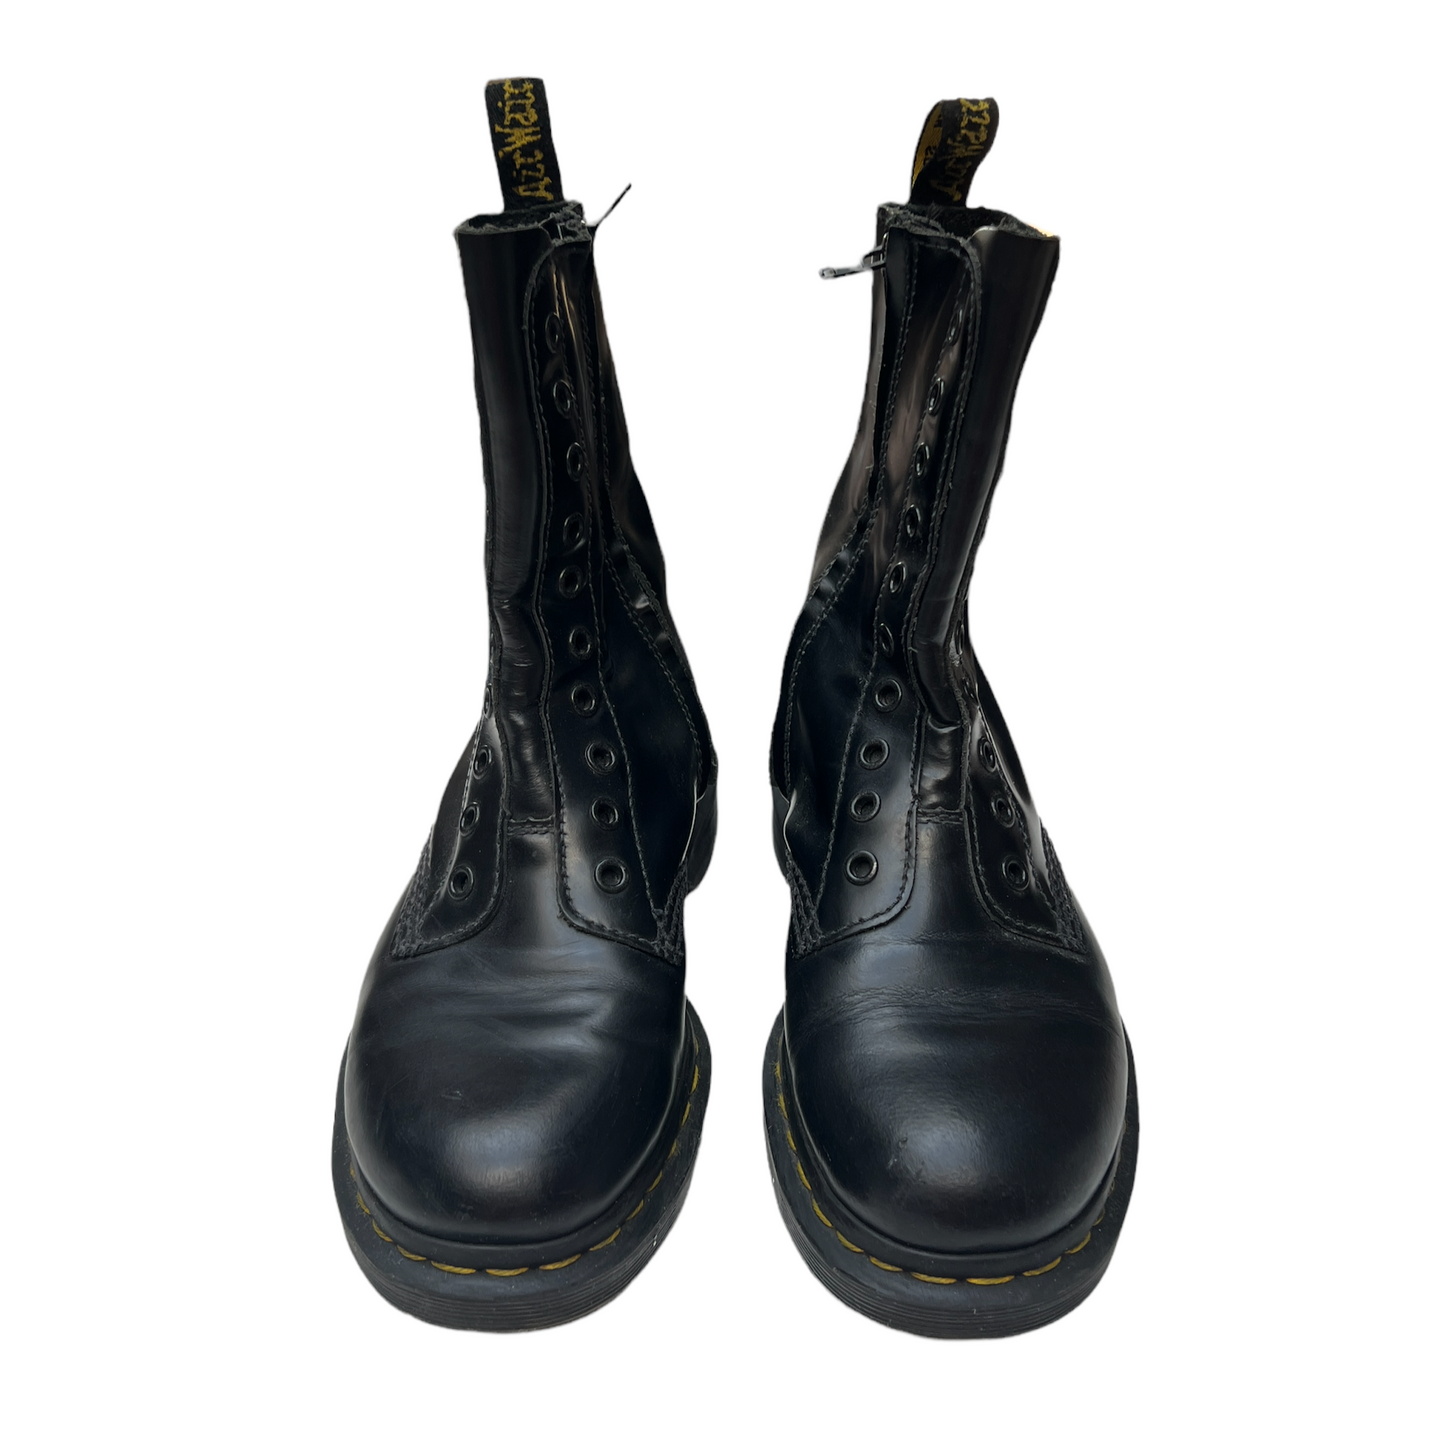 Vetements x Dr. Martens Black Boots - 8